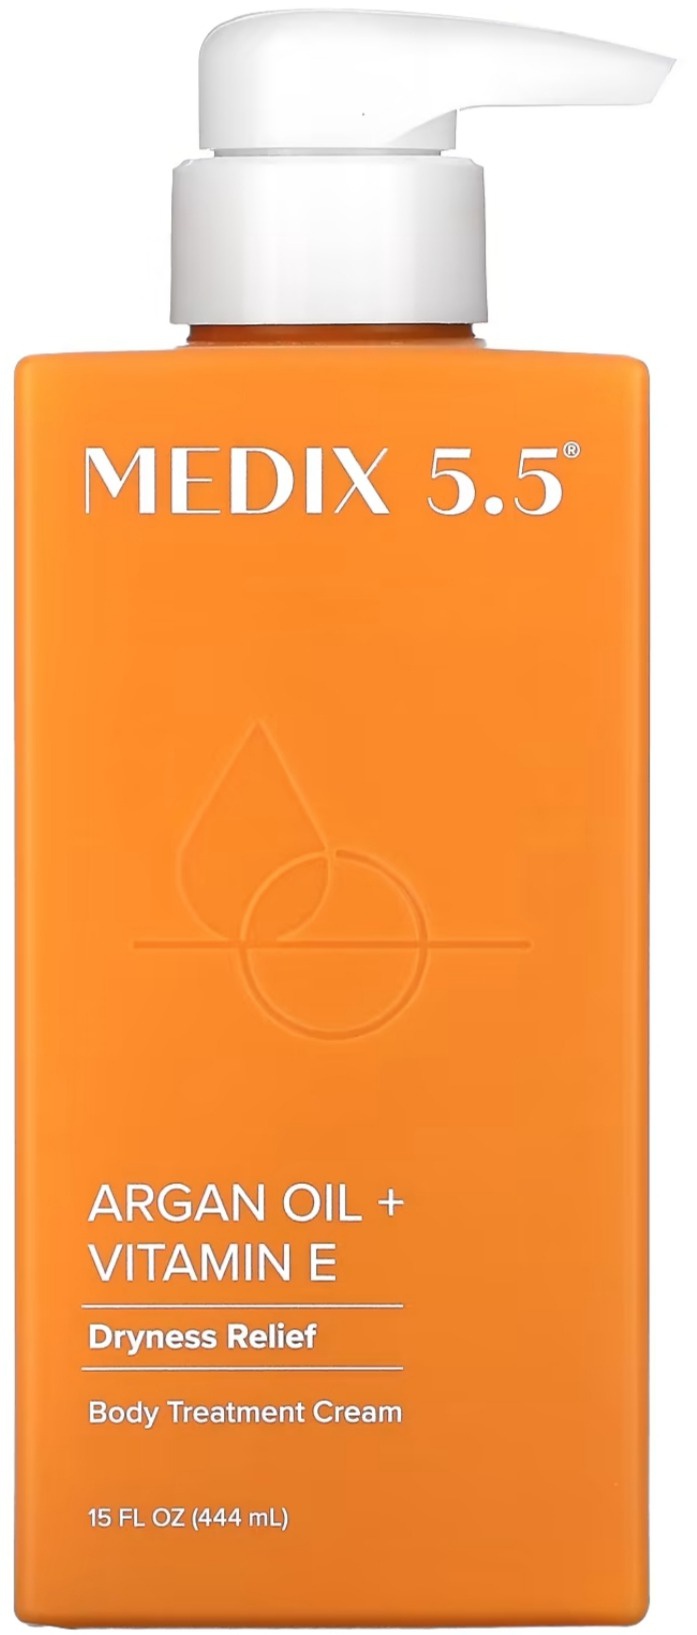 Medix 5.5 Body Treatment Cream Argan Oil + Vitamin E